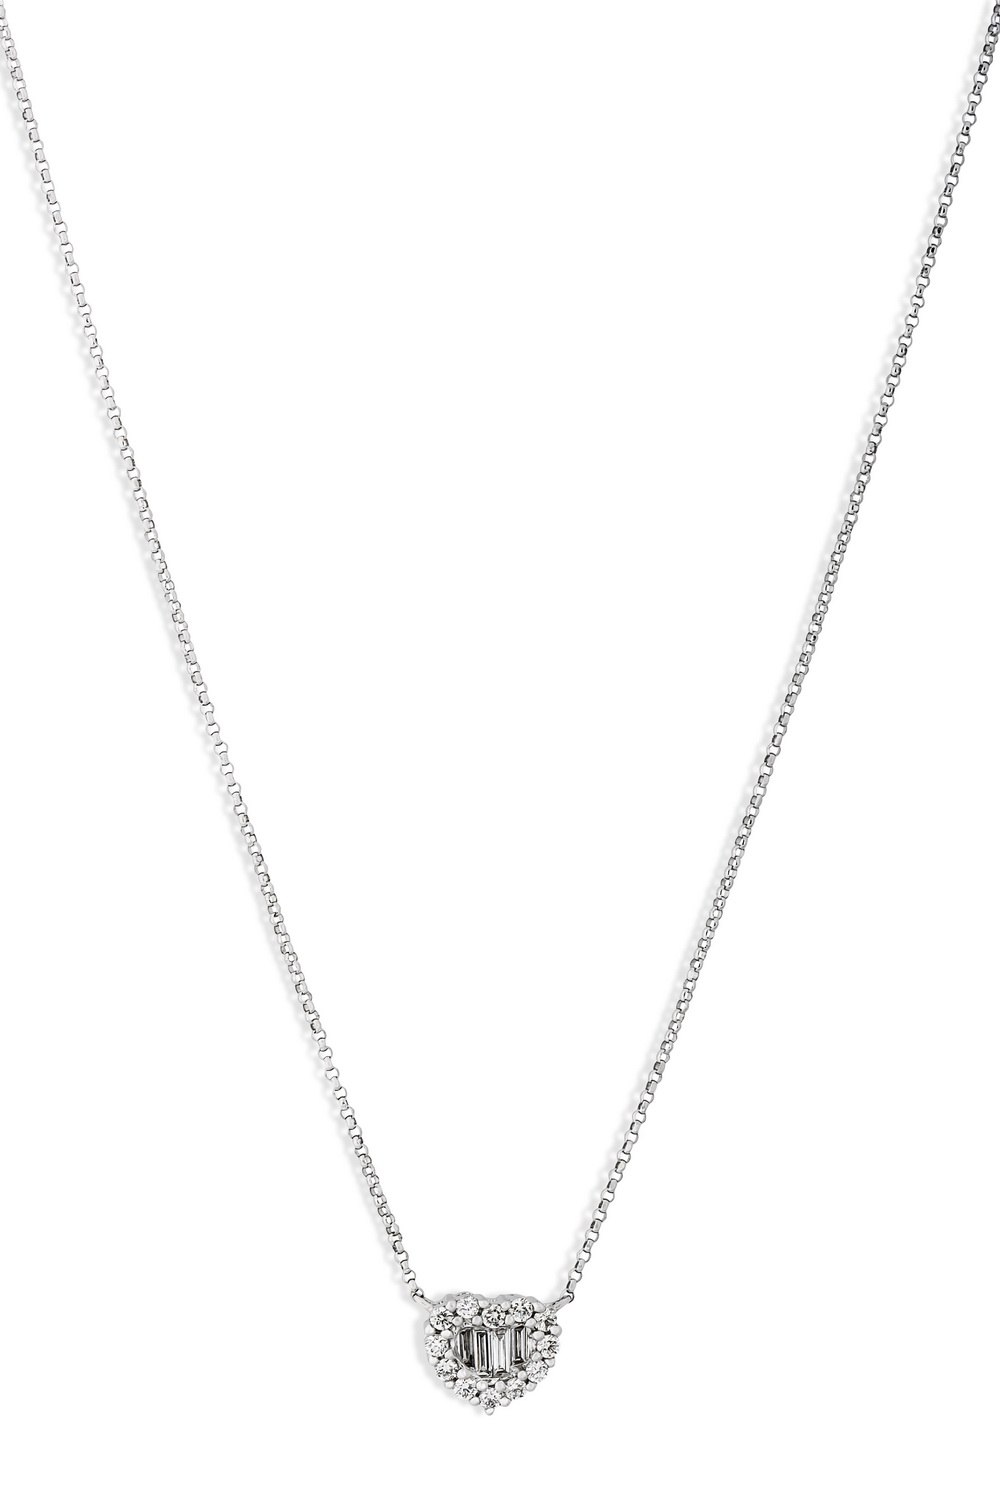 KESSARIS Heart Diamond Cluster Pendant Necklace KOE161526